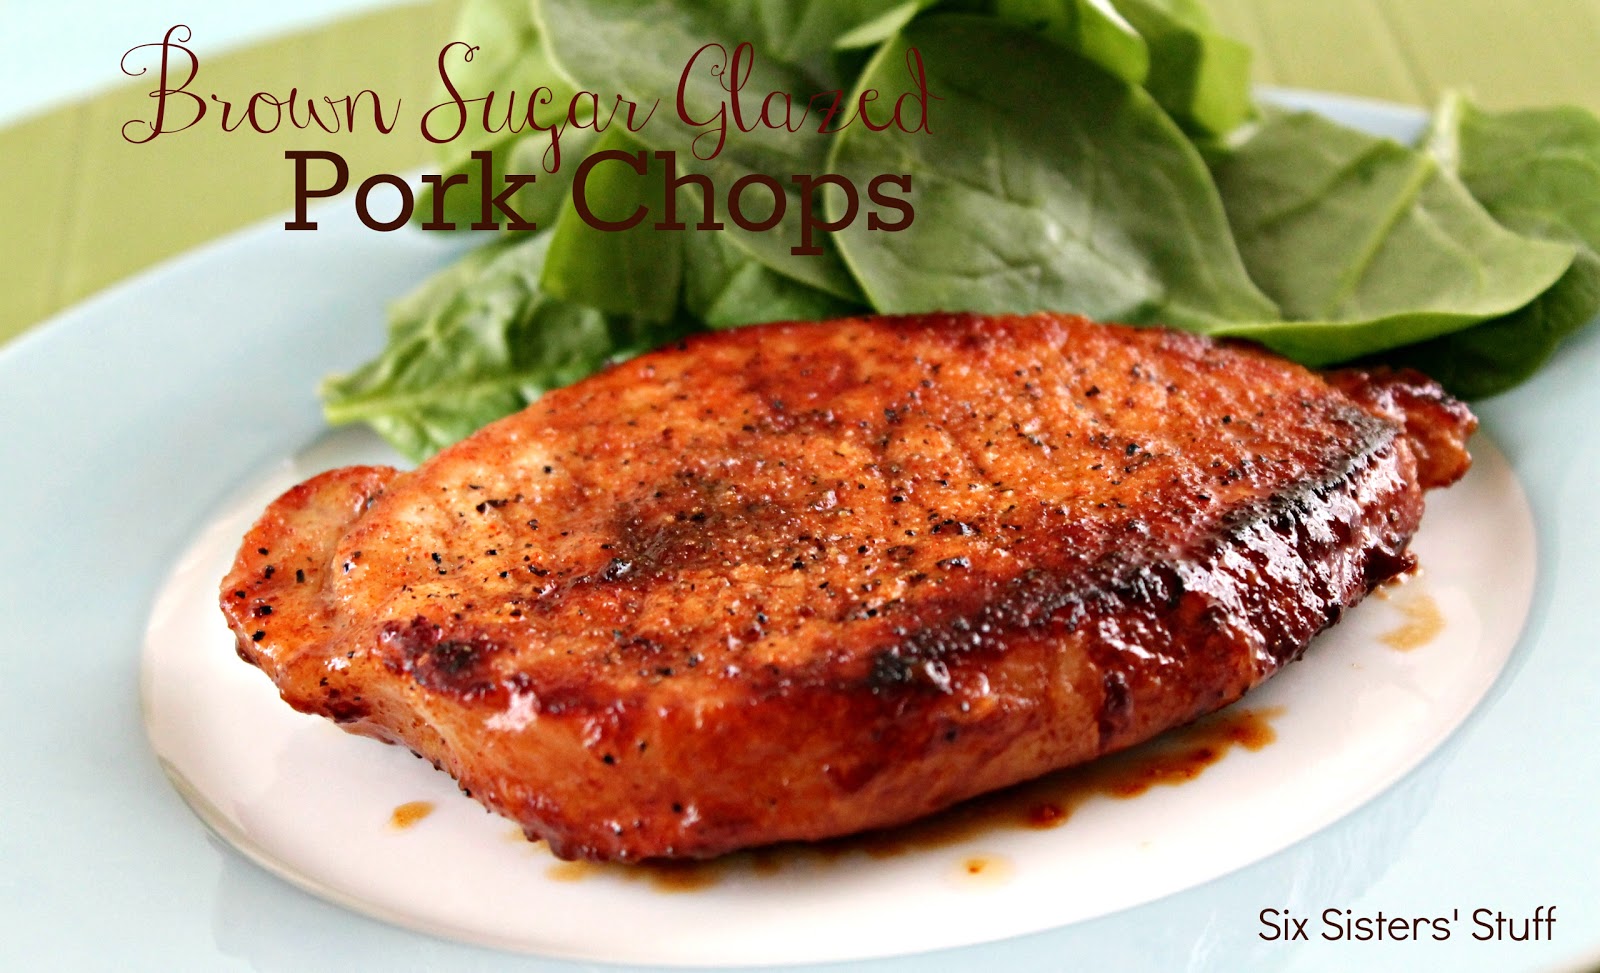 Brown Sugar Glazed Pork Chops Recipe | Six Sisters' Stuff